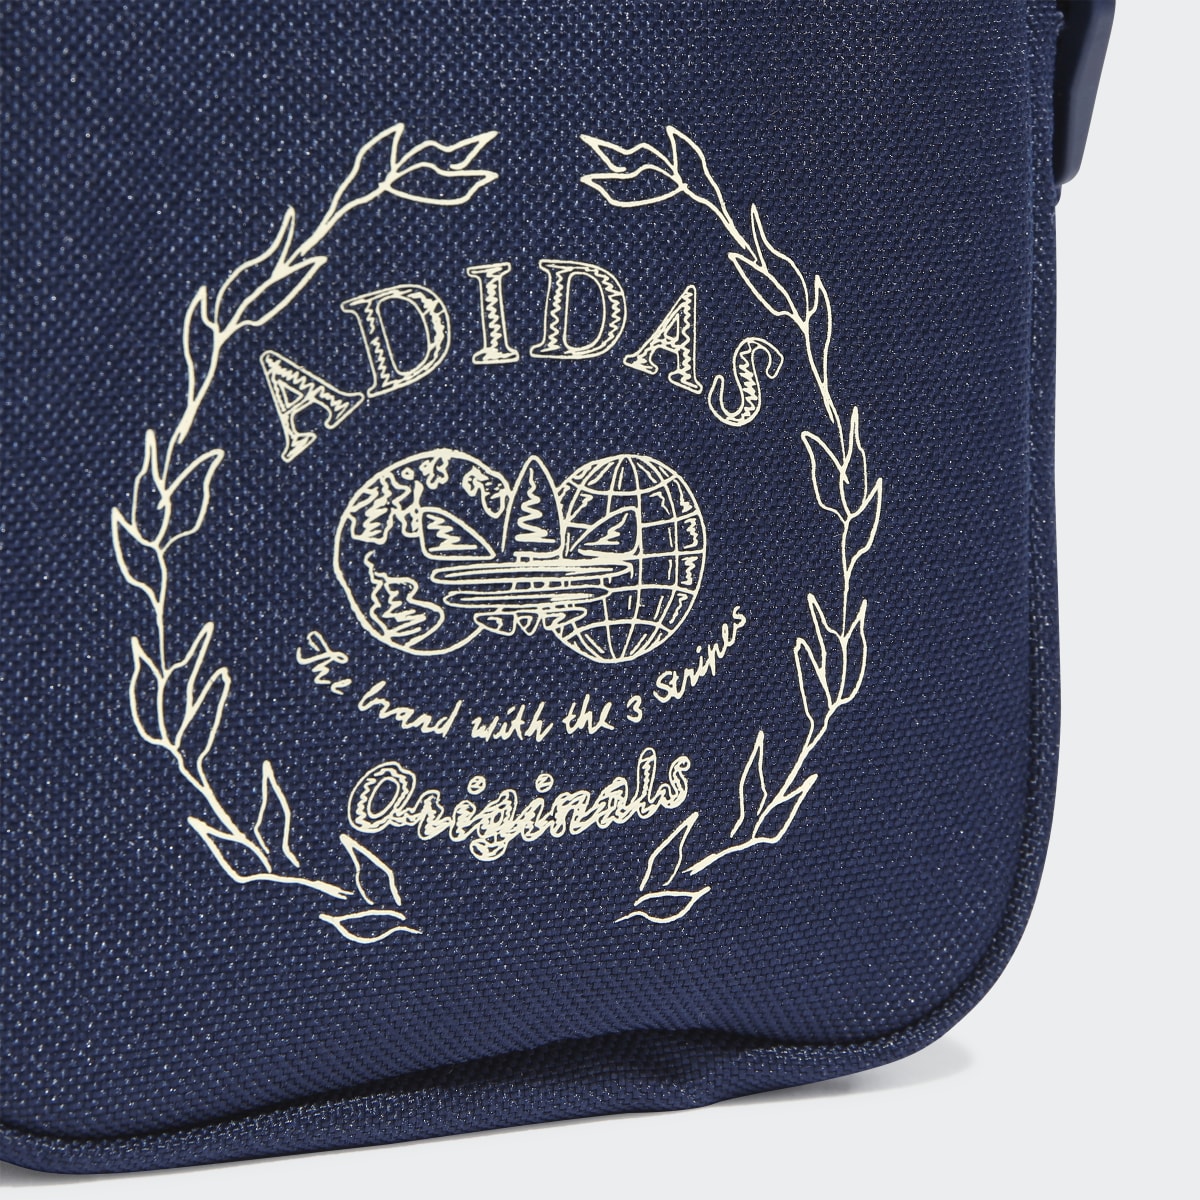 Adidas Bolsa de Festival Hack the Archive. 6